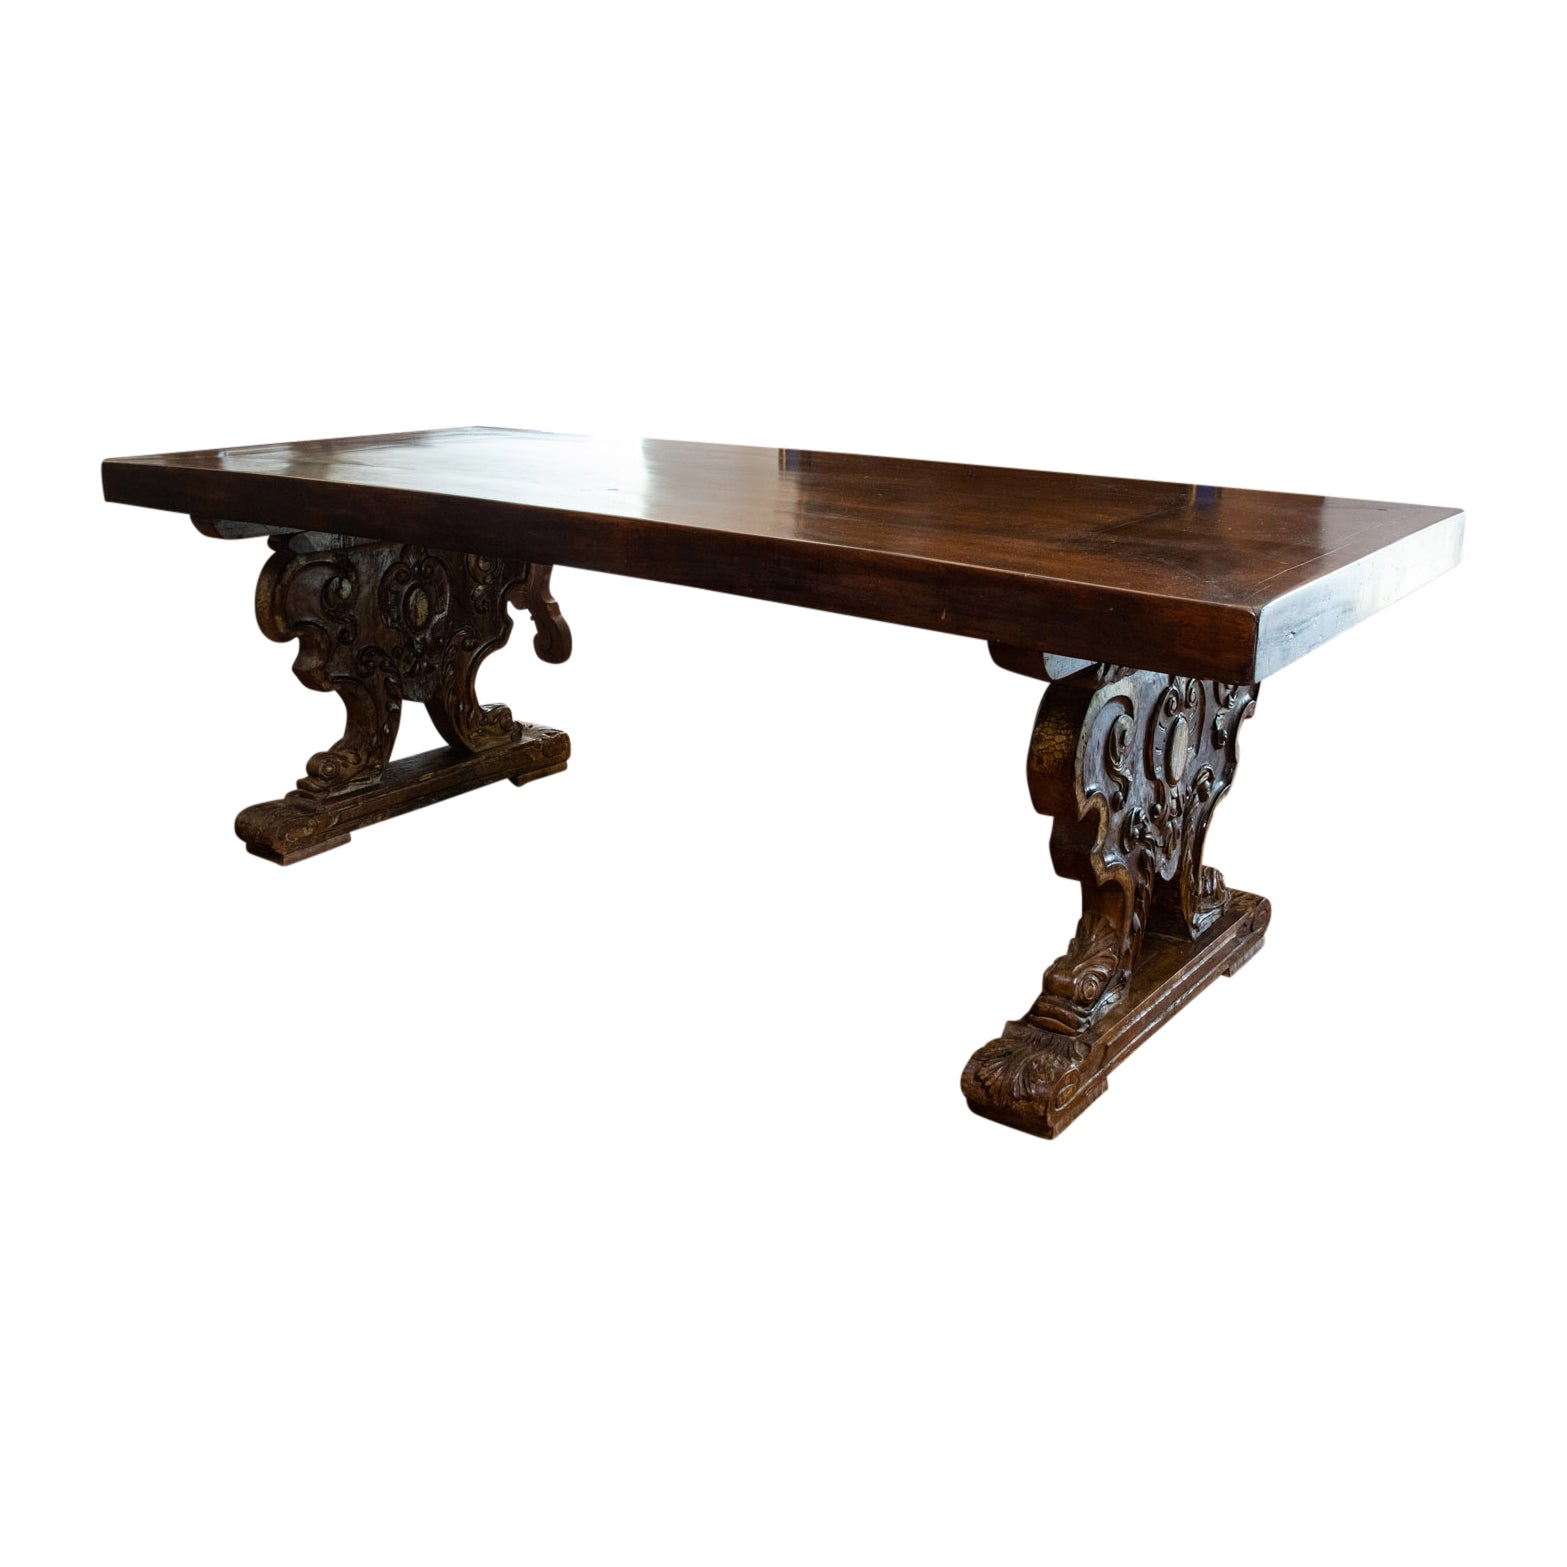 A late 19th Century Italian Renaissance Style Console Table